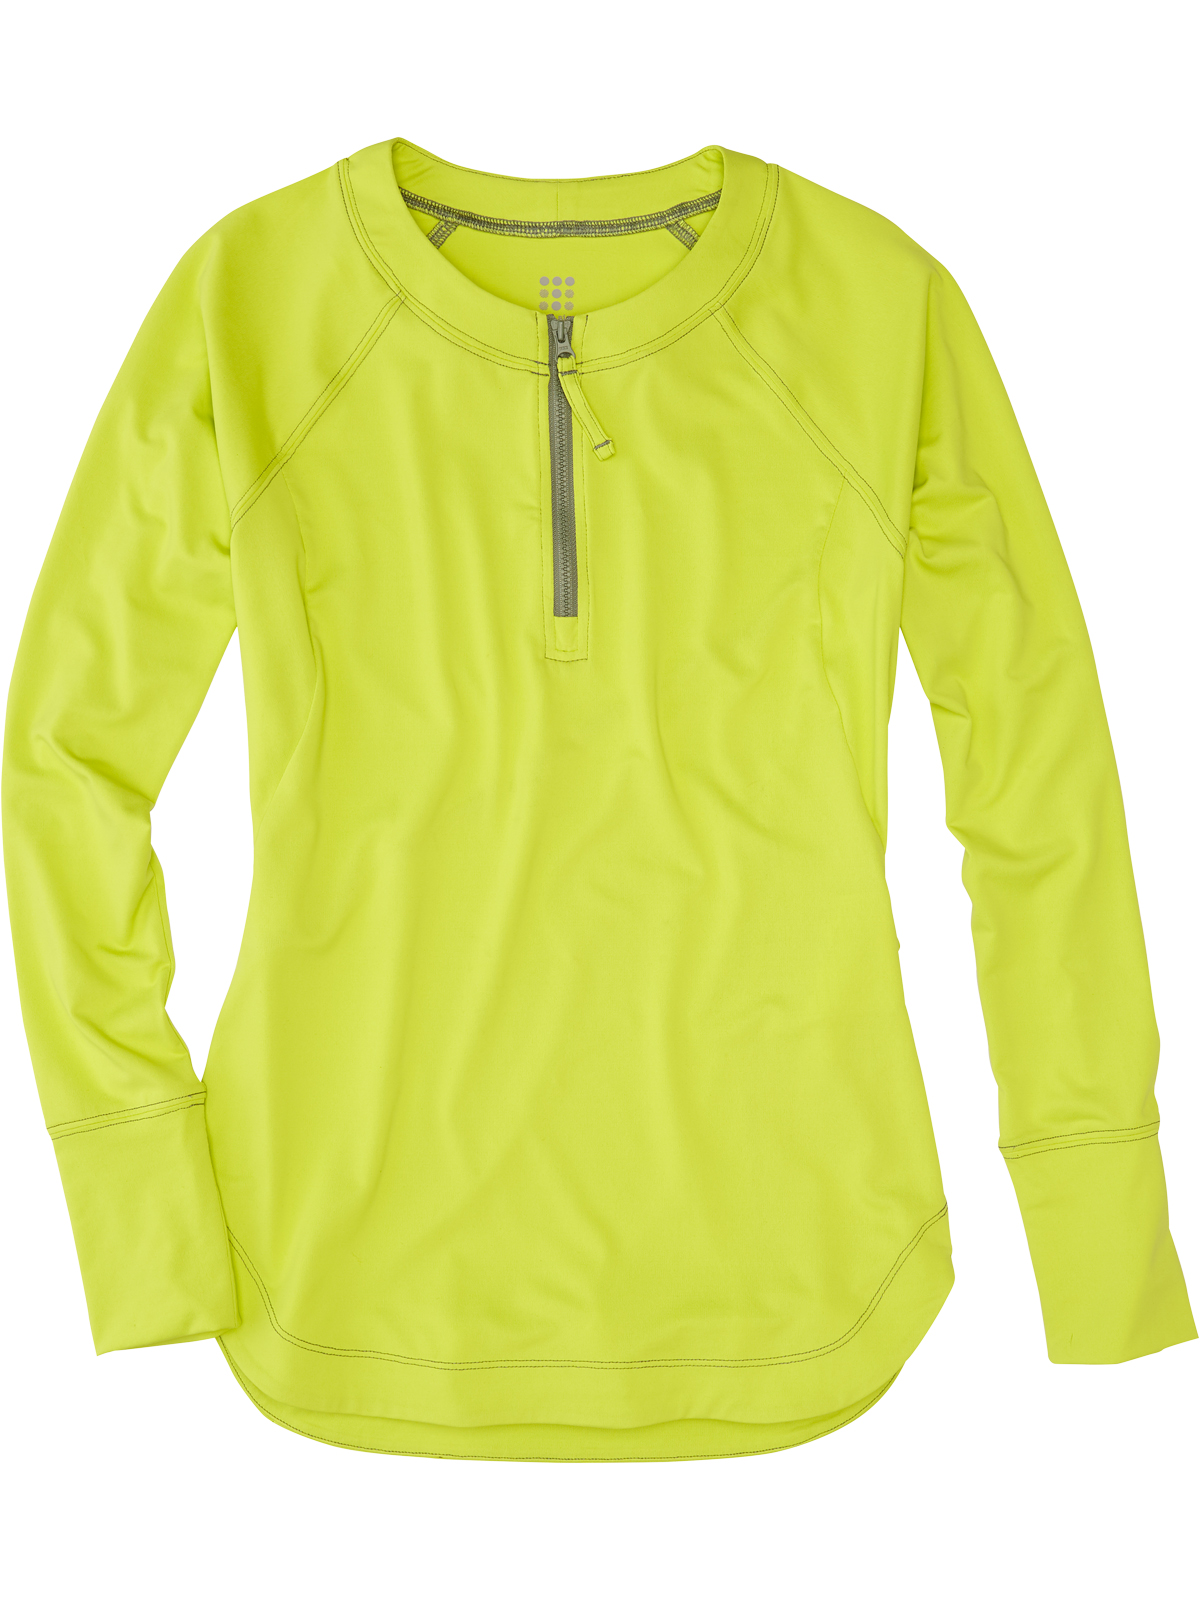 Buy Women Yellow Solid Long Sleeves Shirt Online - 720927